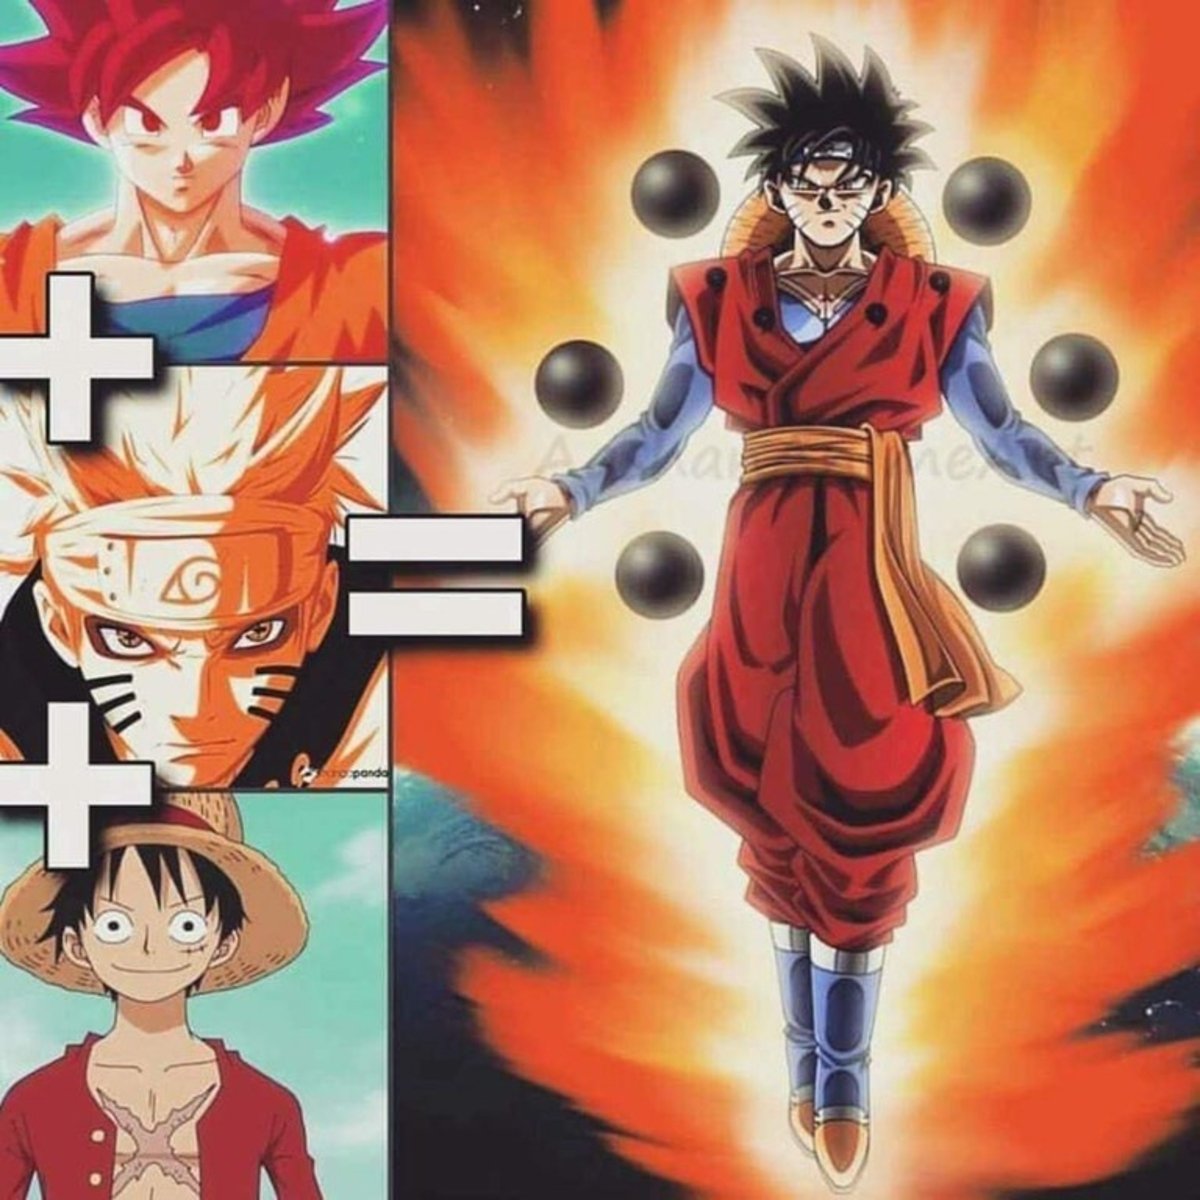 Dragon Ball: Goku tendría este aspecto si se fusionase con Luffy y Naruto en un crossover